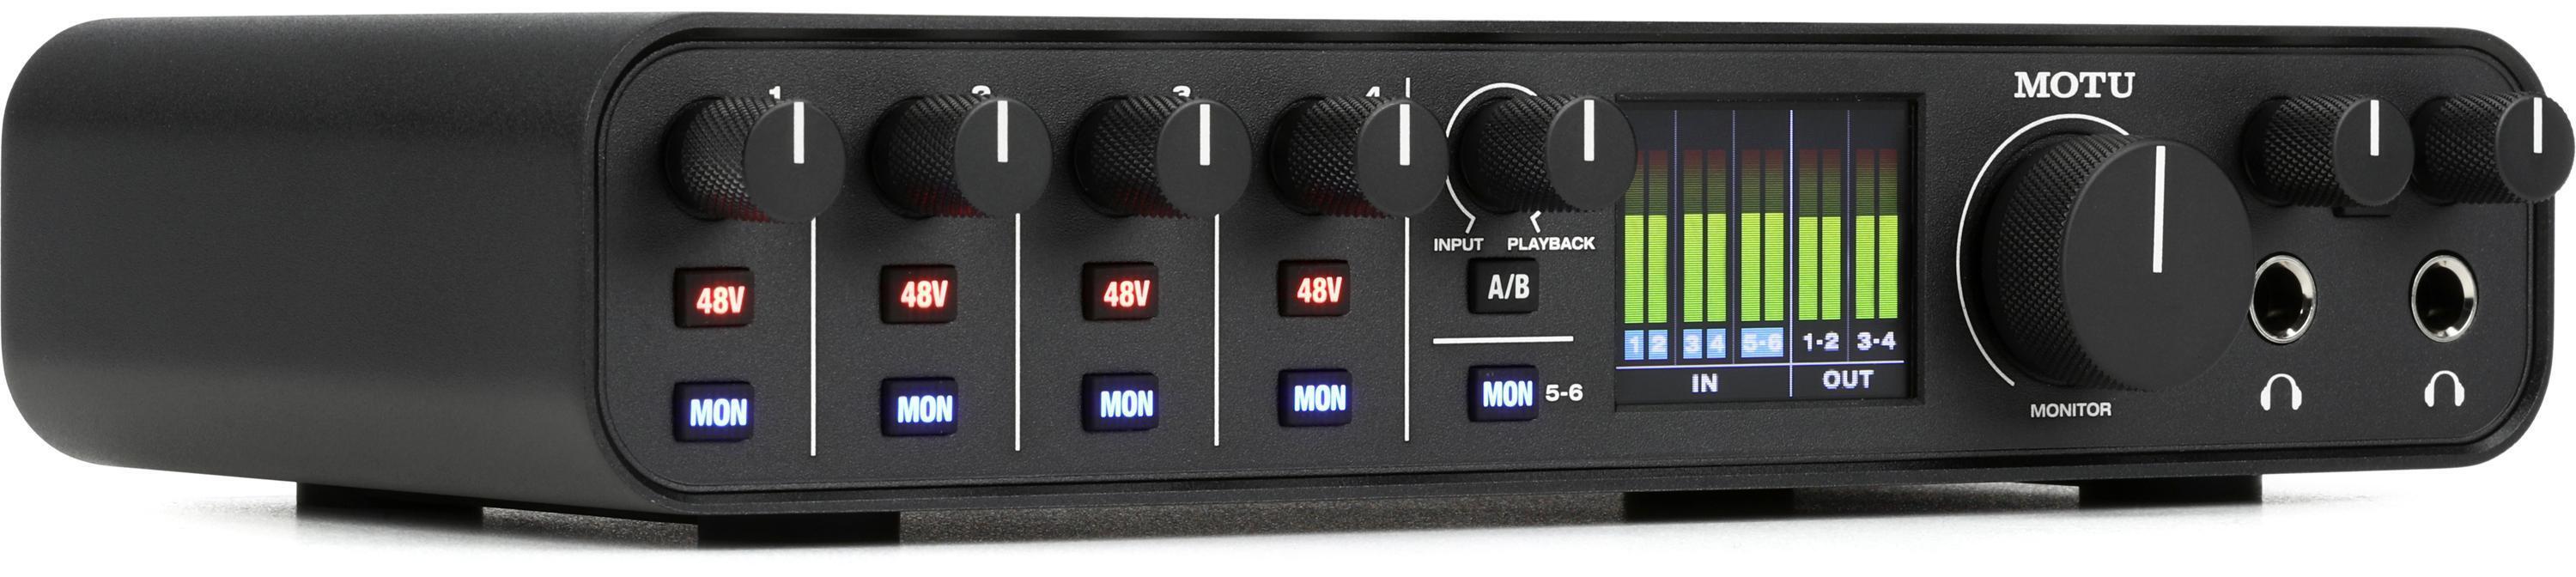 MOTU M6 6x4 USB-C Audio Interface | Sweetwater